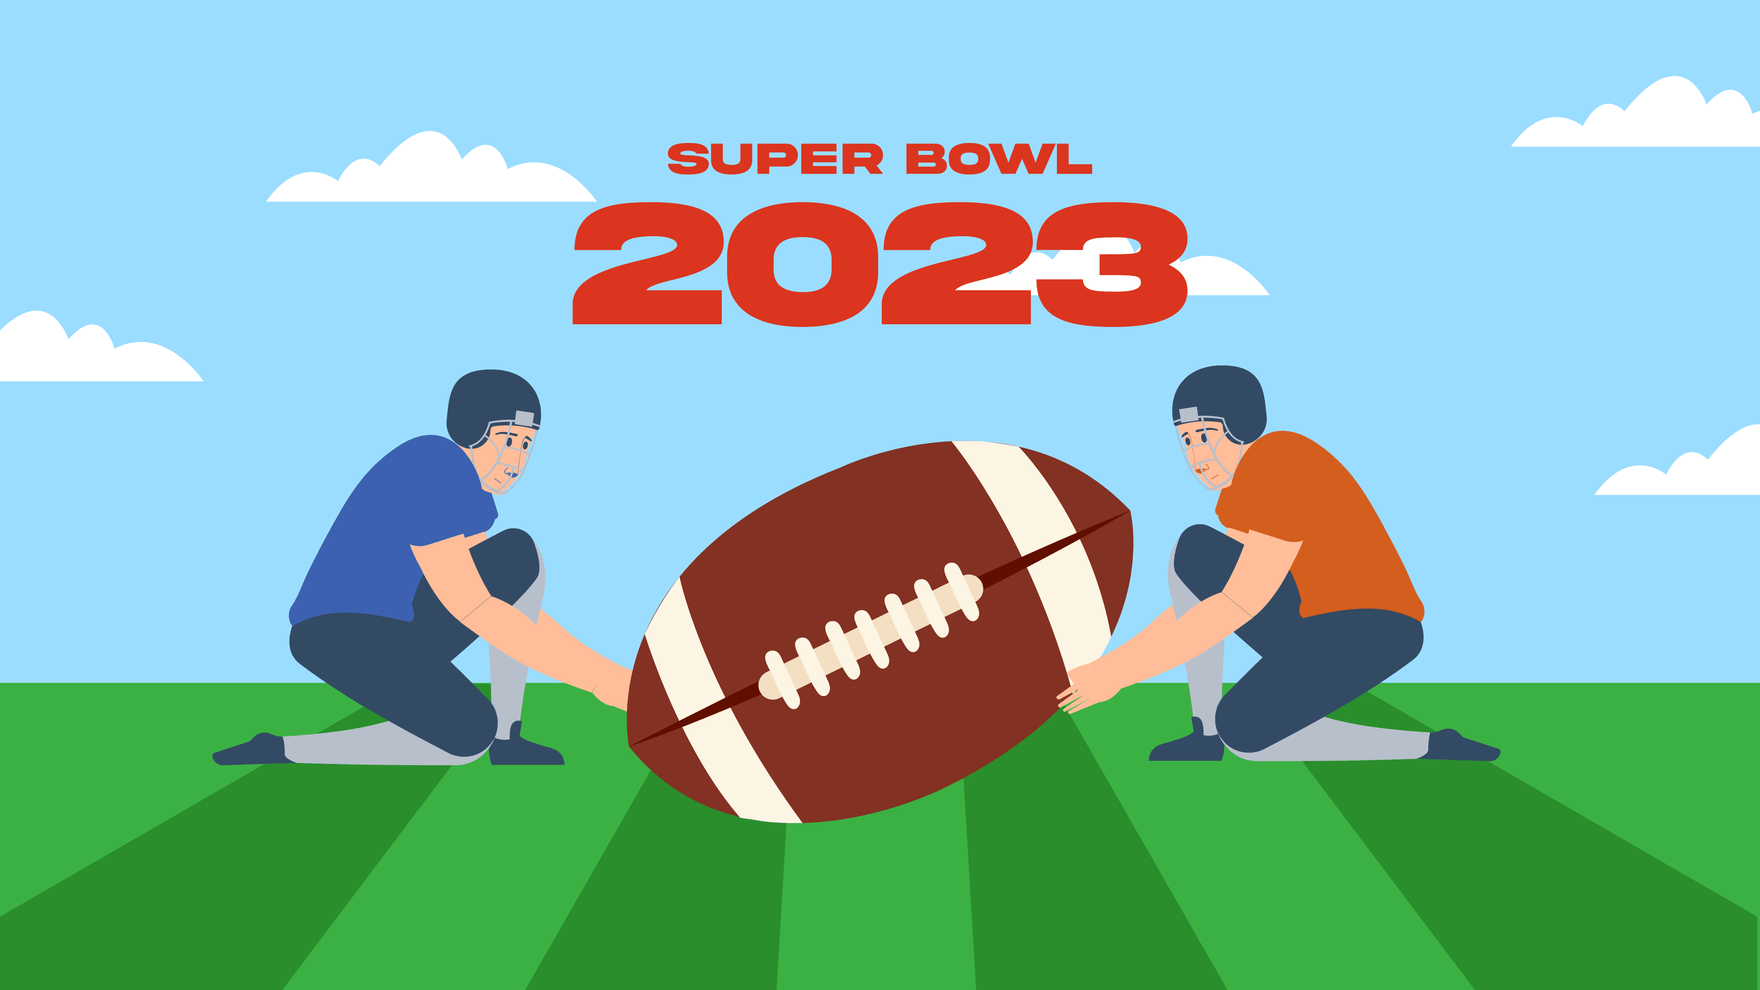 Free High Resolution Super Bowl 2023 Background